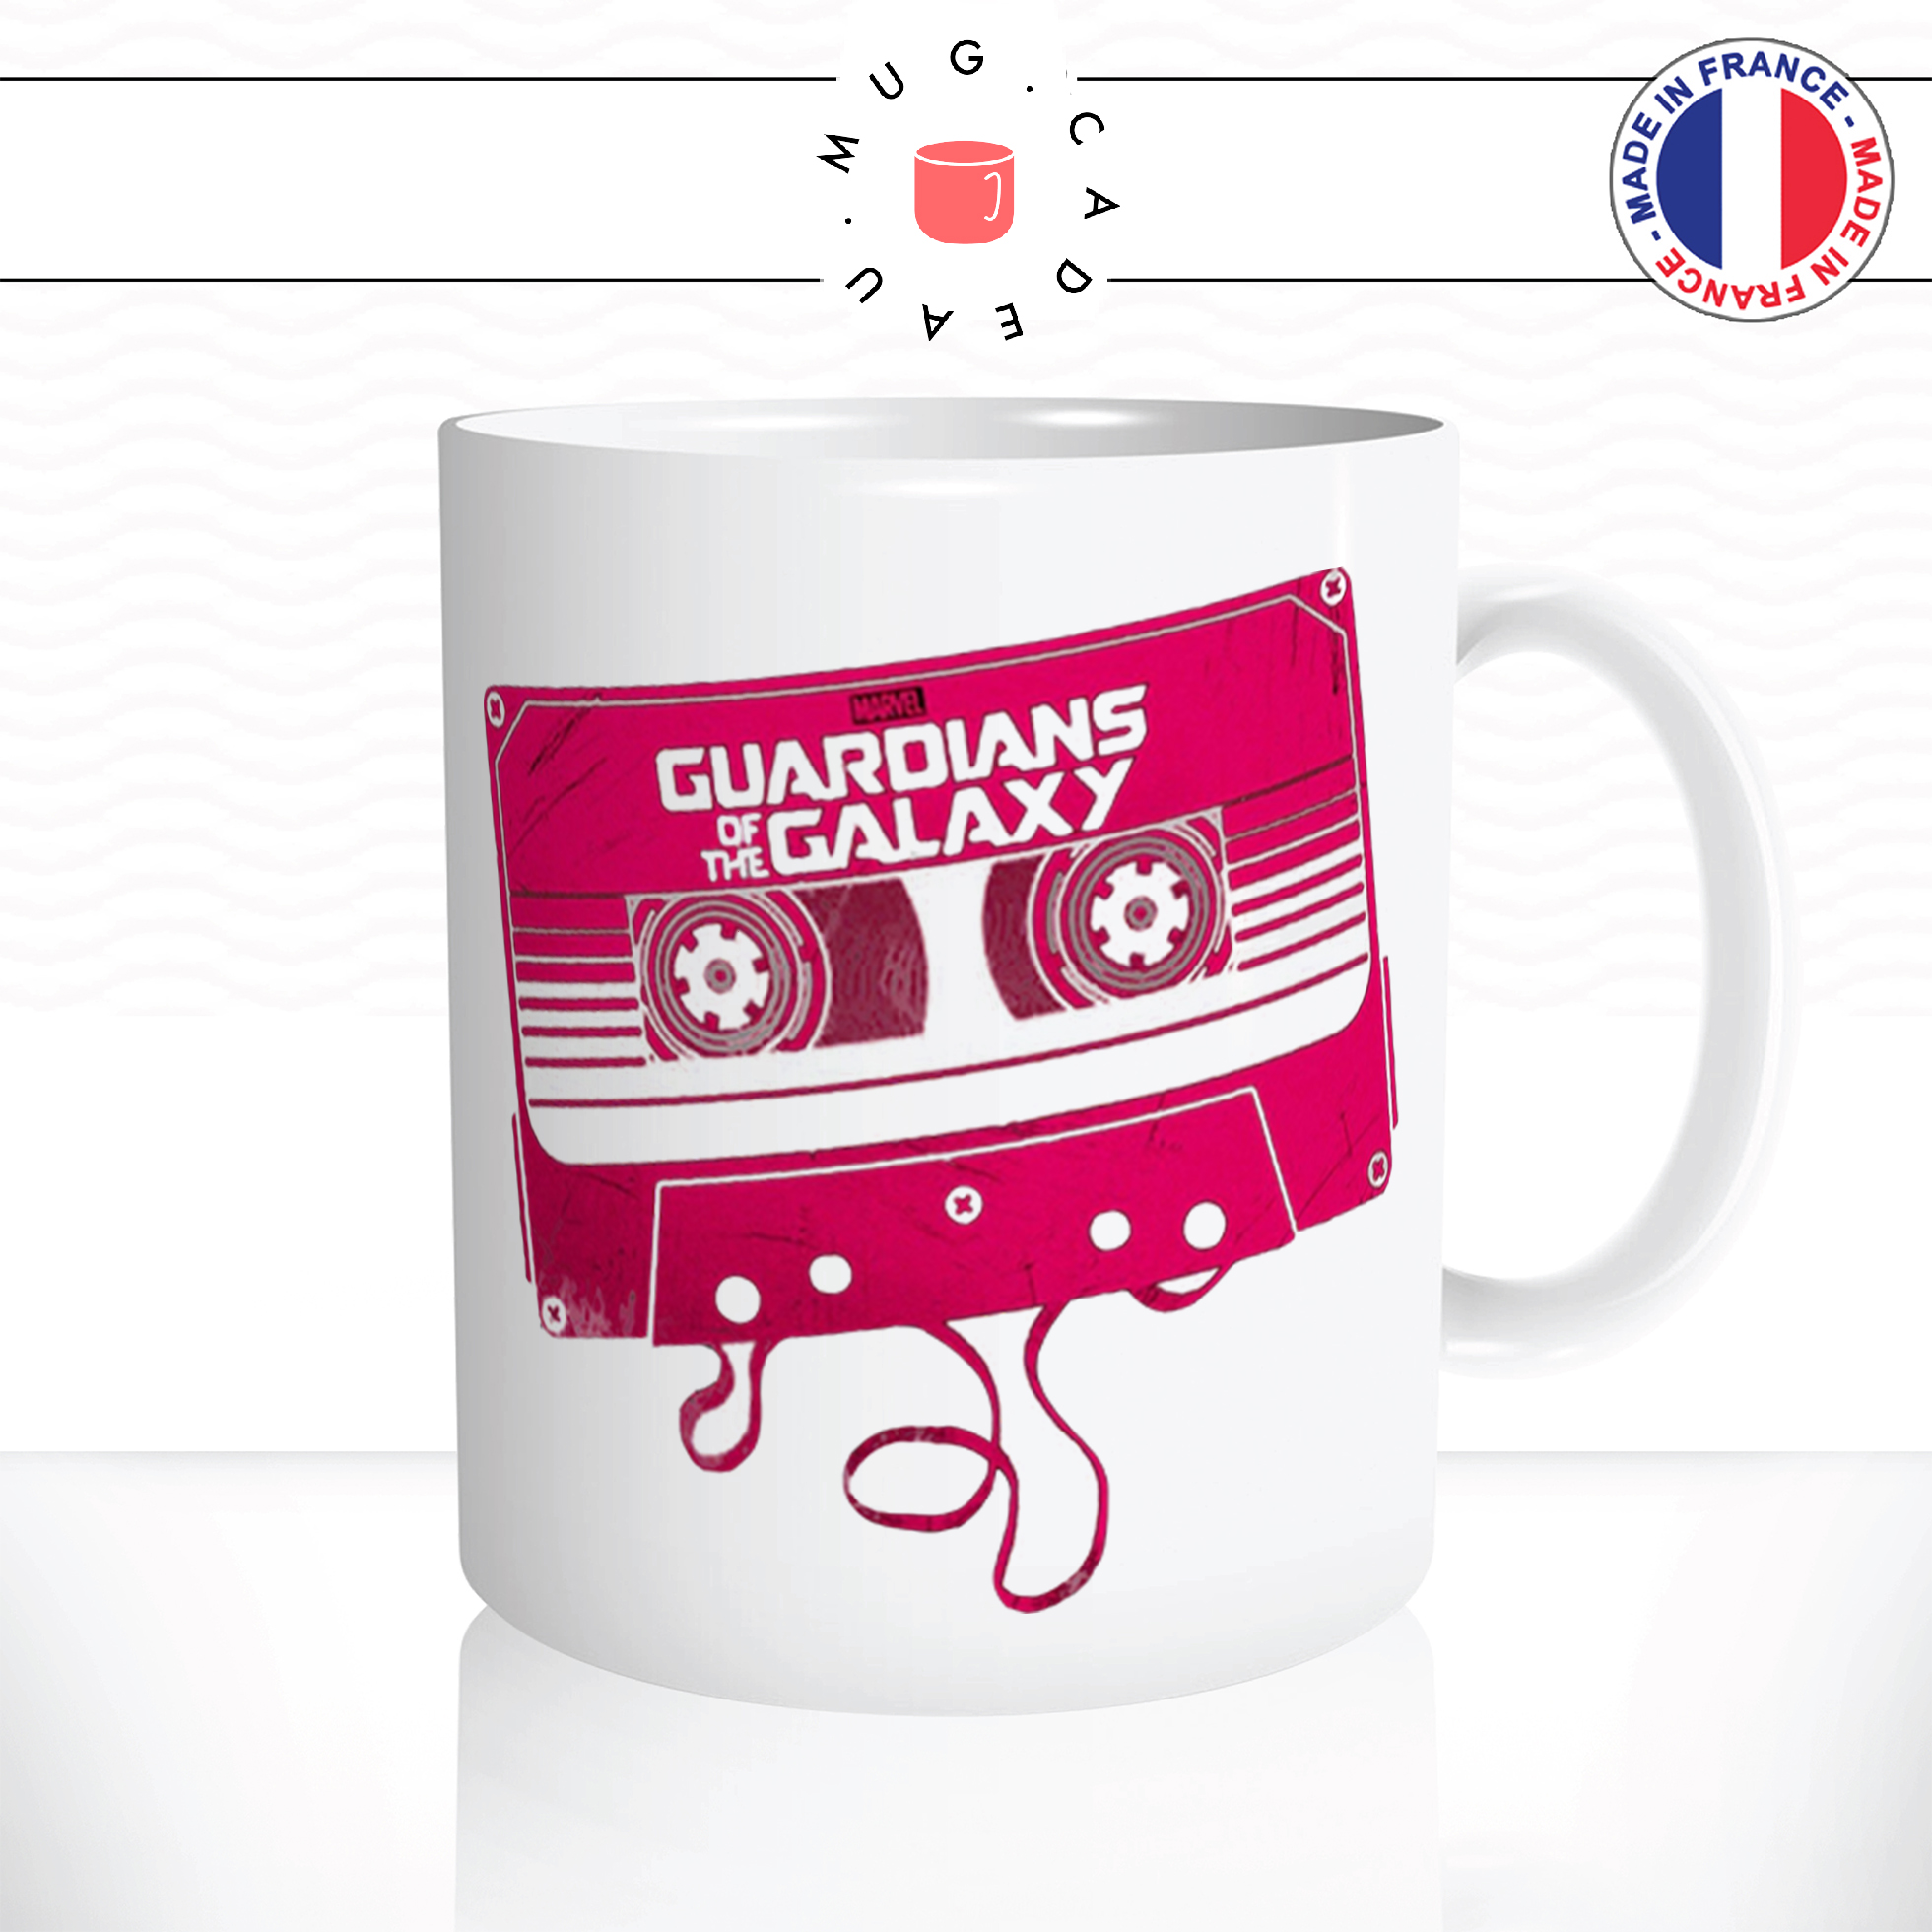 mug-tasse-ref6-gardiens-galaxie-cassette-awsome-mix-cafe-the-mugs-tasses-personnalise-anse-droite